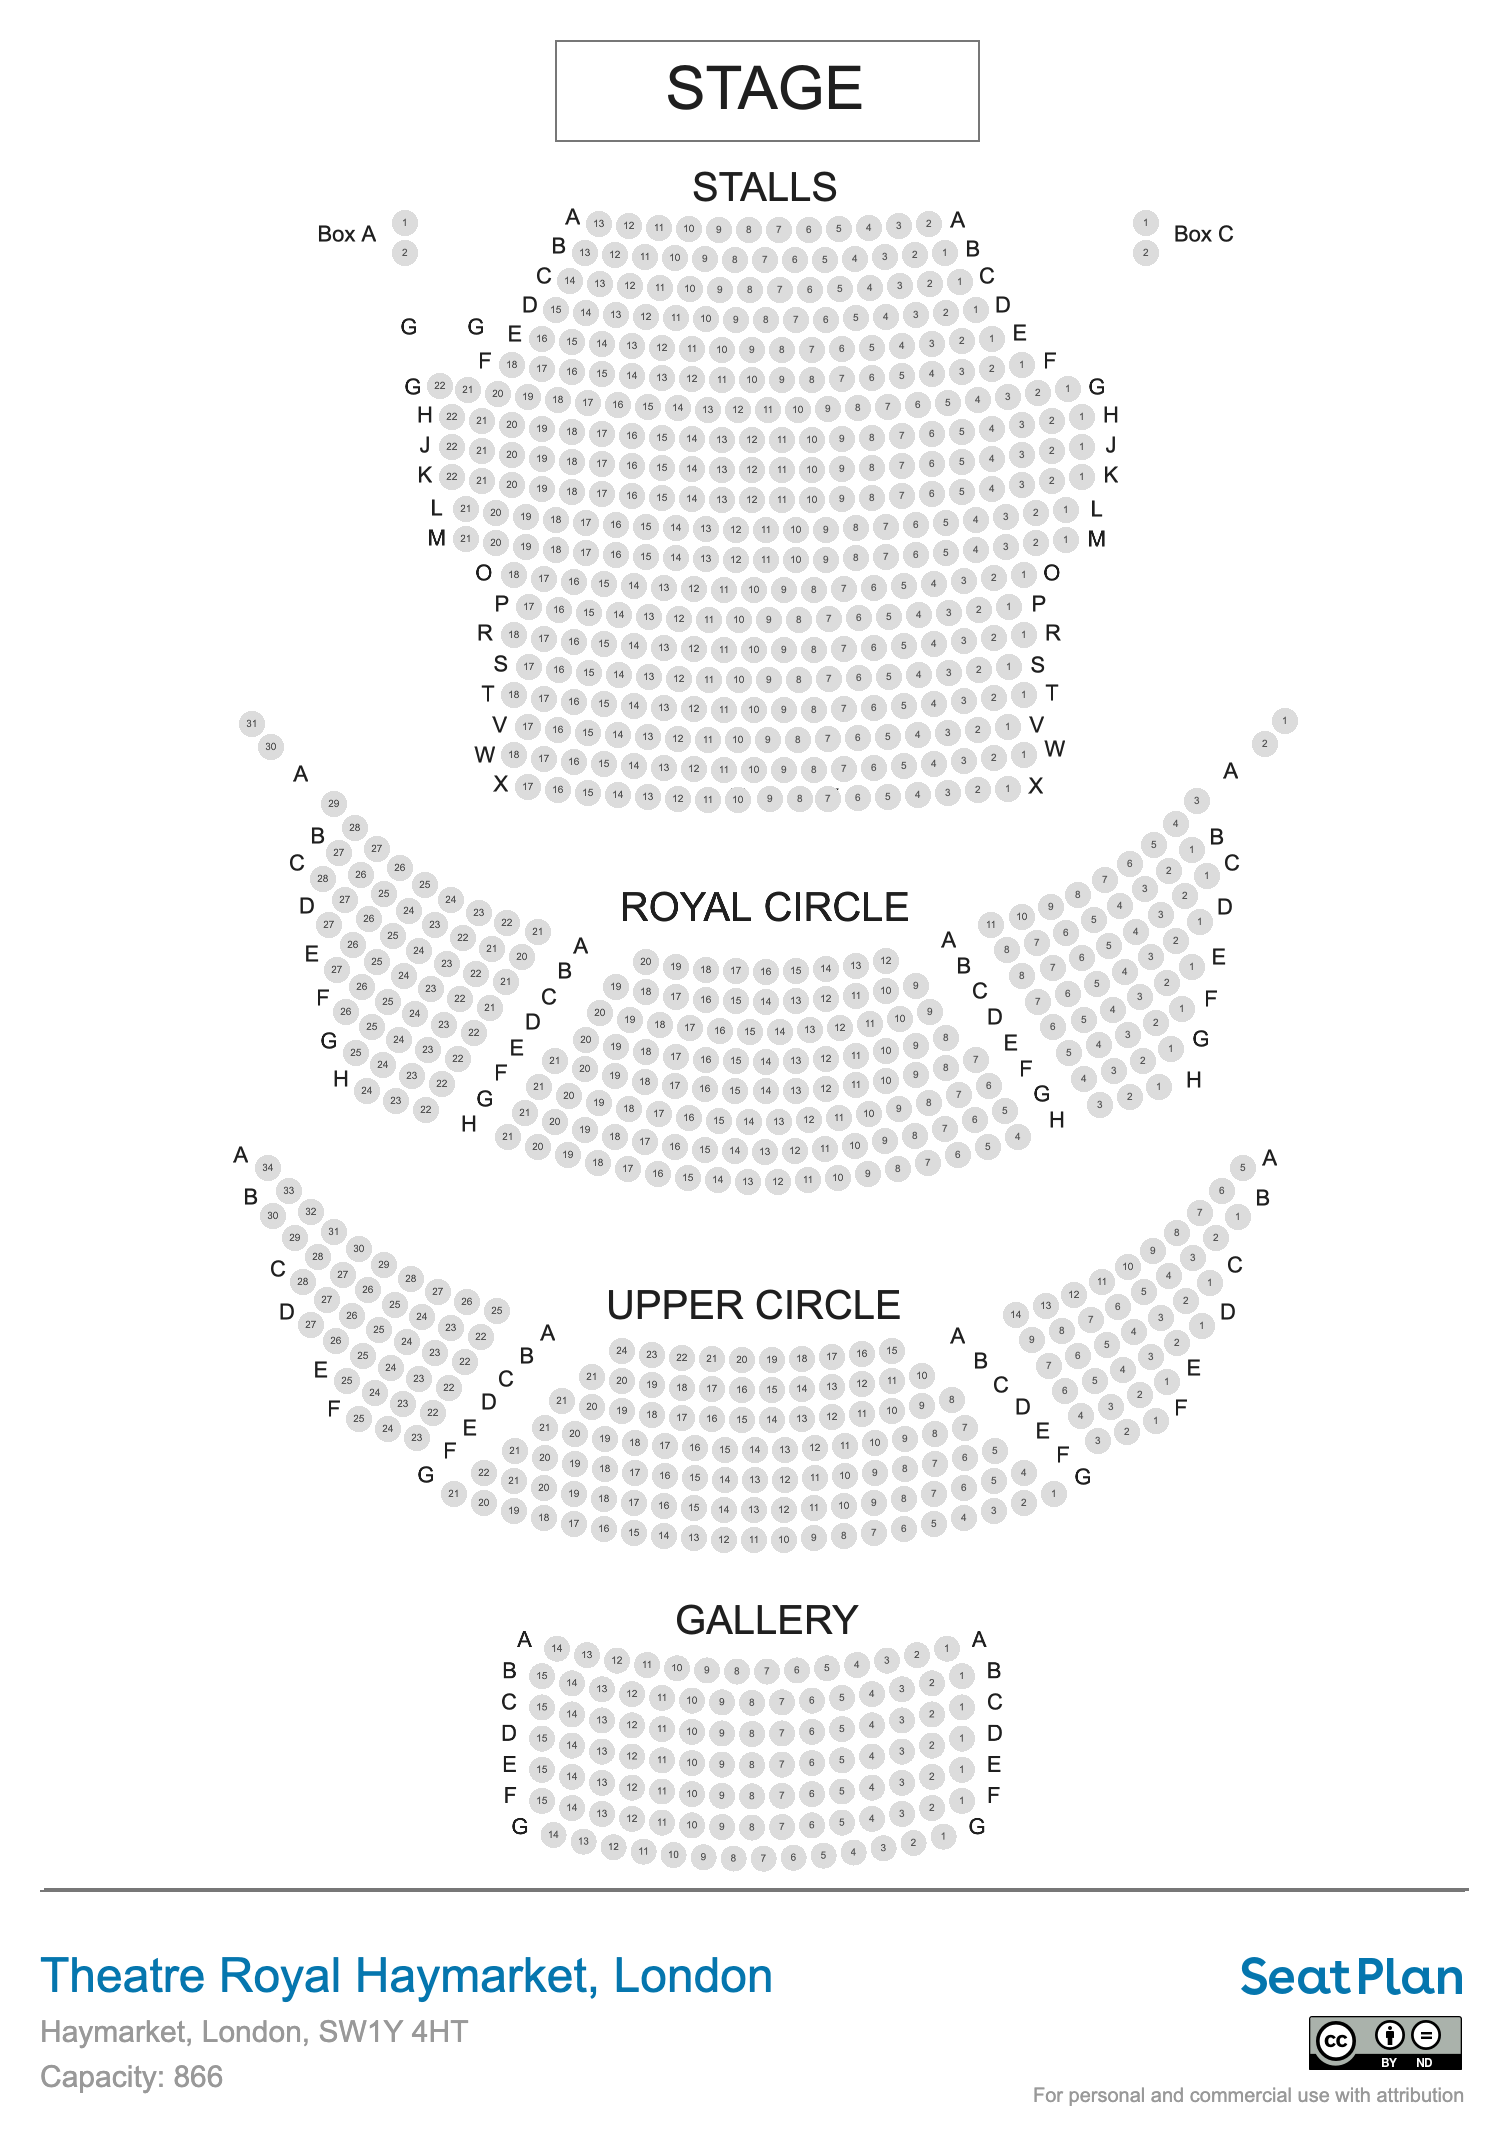 theatre royal haymarket venue seating plan london